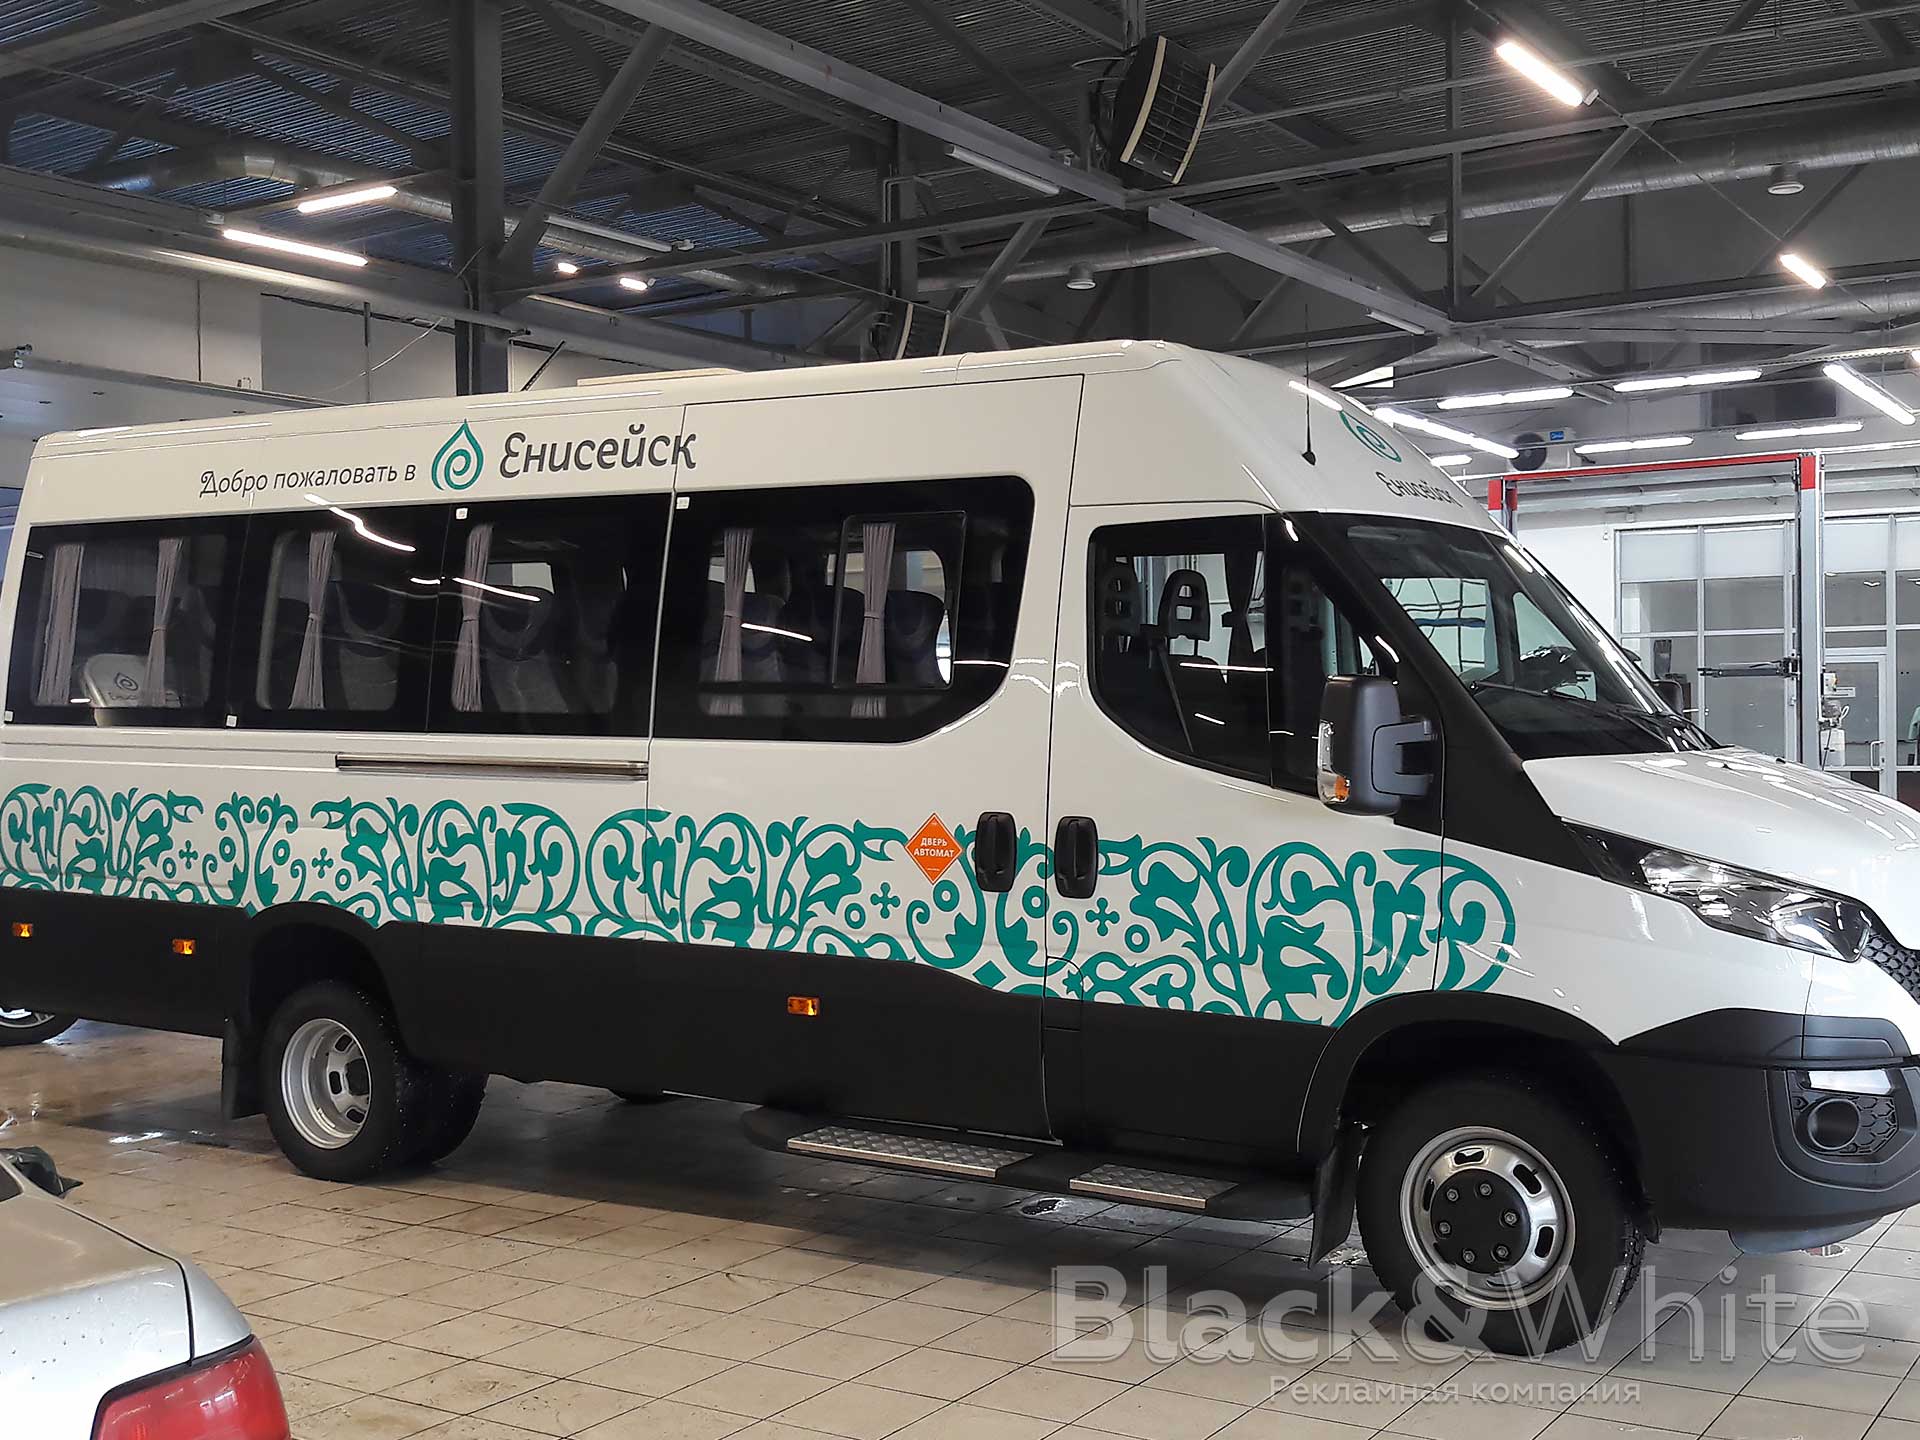 Брендирование-автобусов-реклама-на-пассажирских-автобусах-в-Красноярске-Black&White.jpg